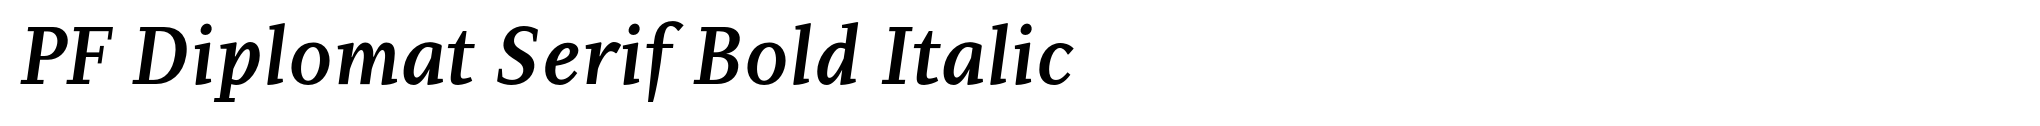 PF Diplomat Serif Bold Italic image